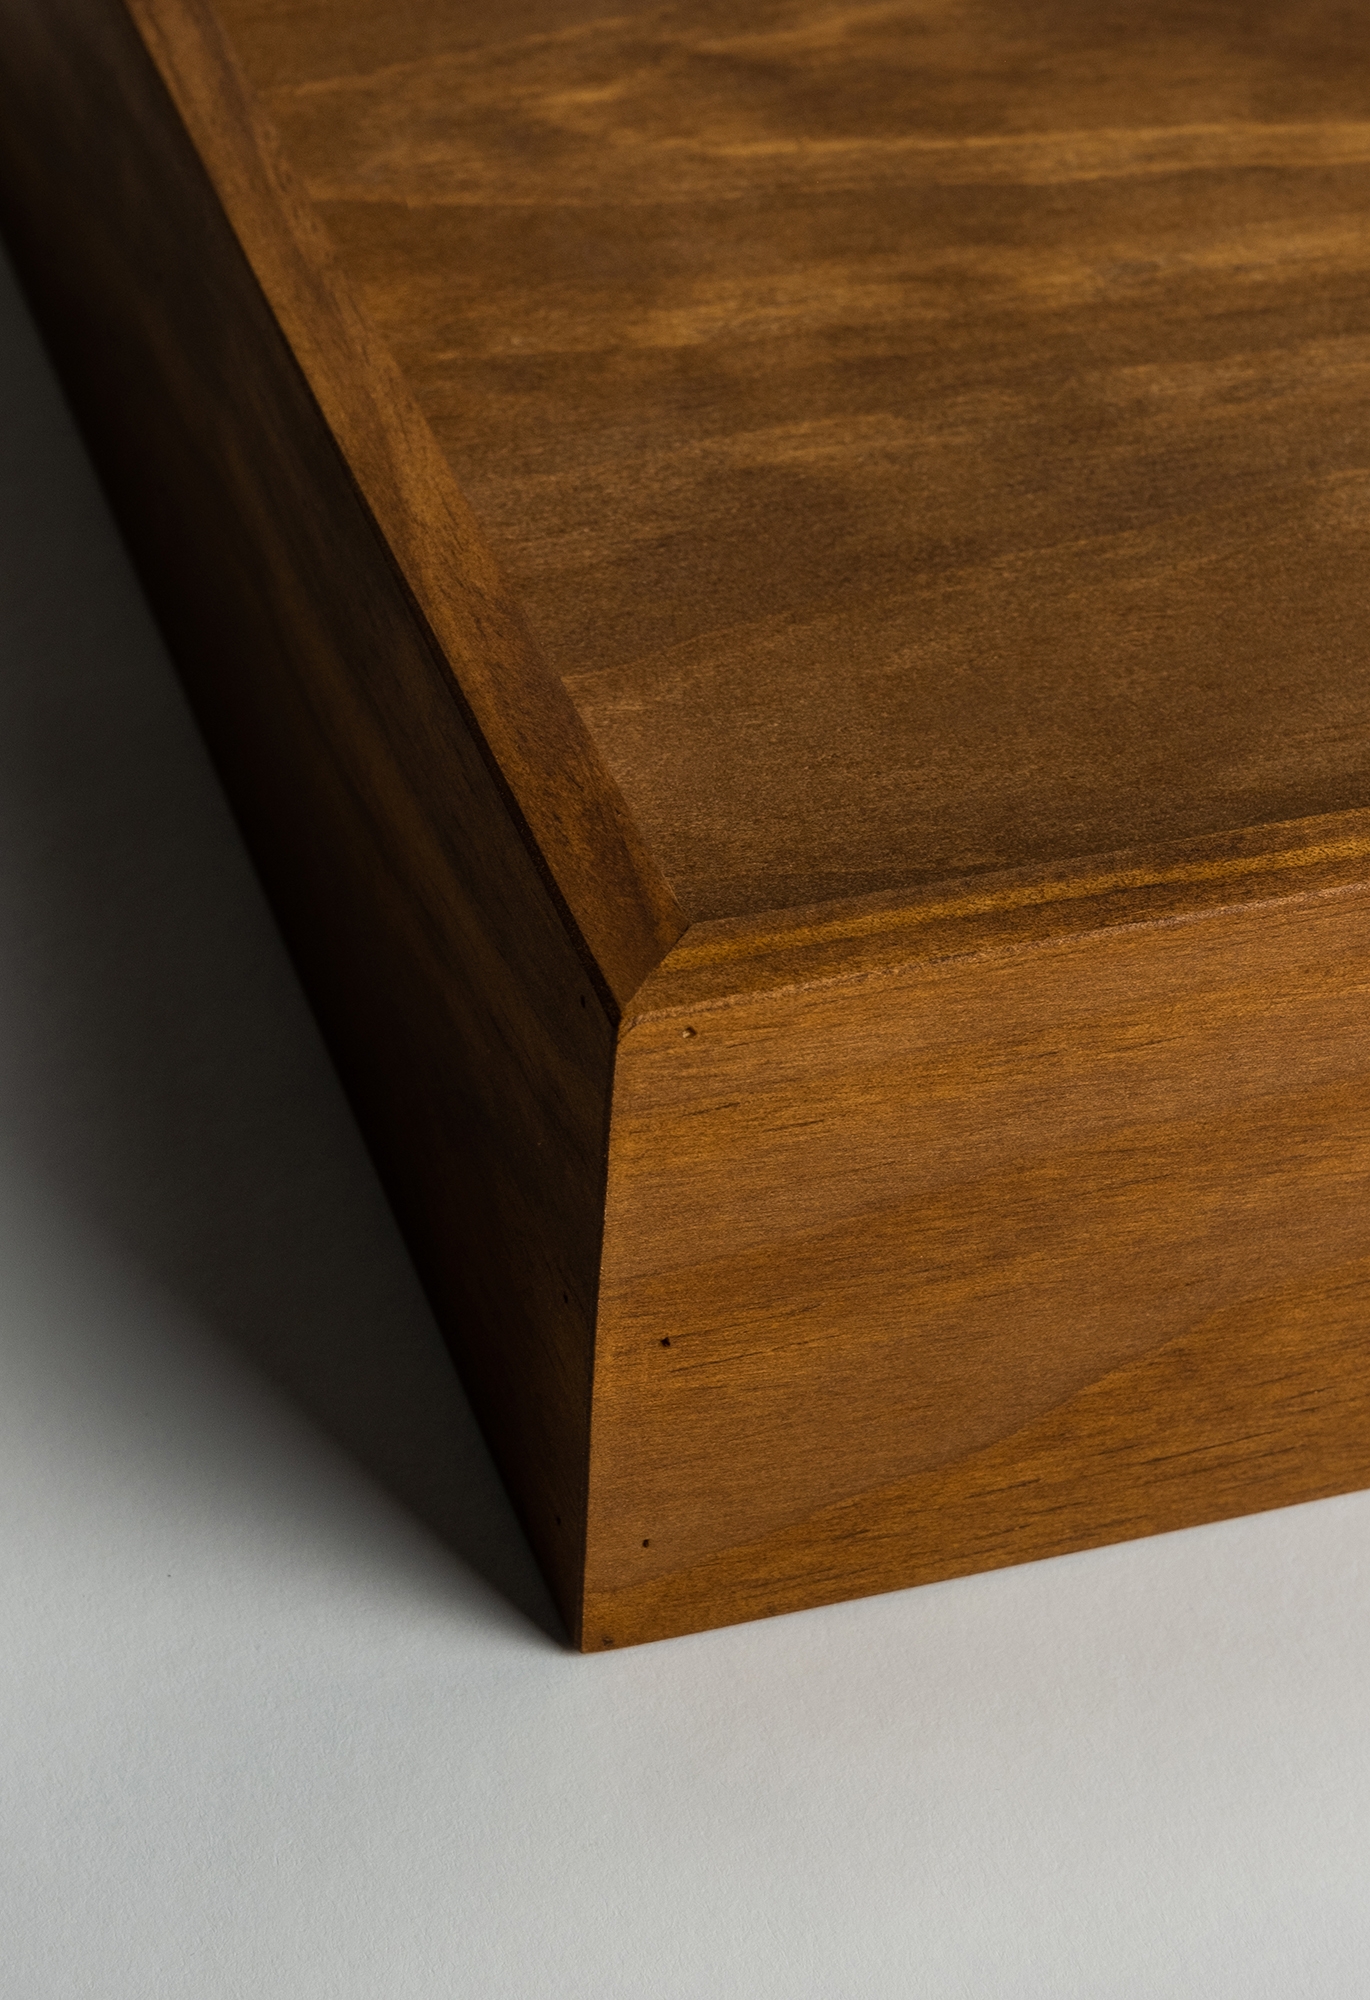 Wood Combo Box Construction details 1